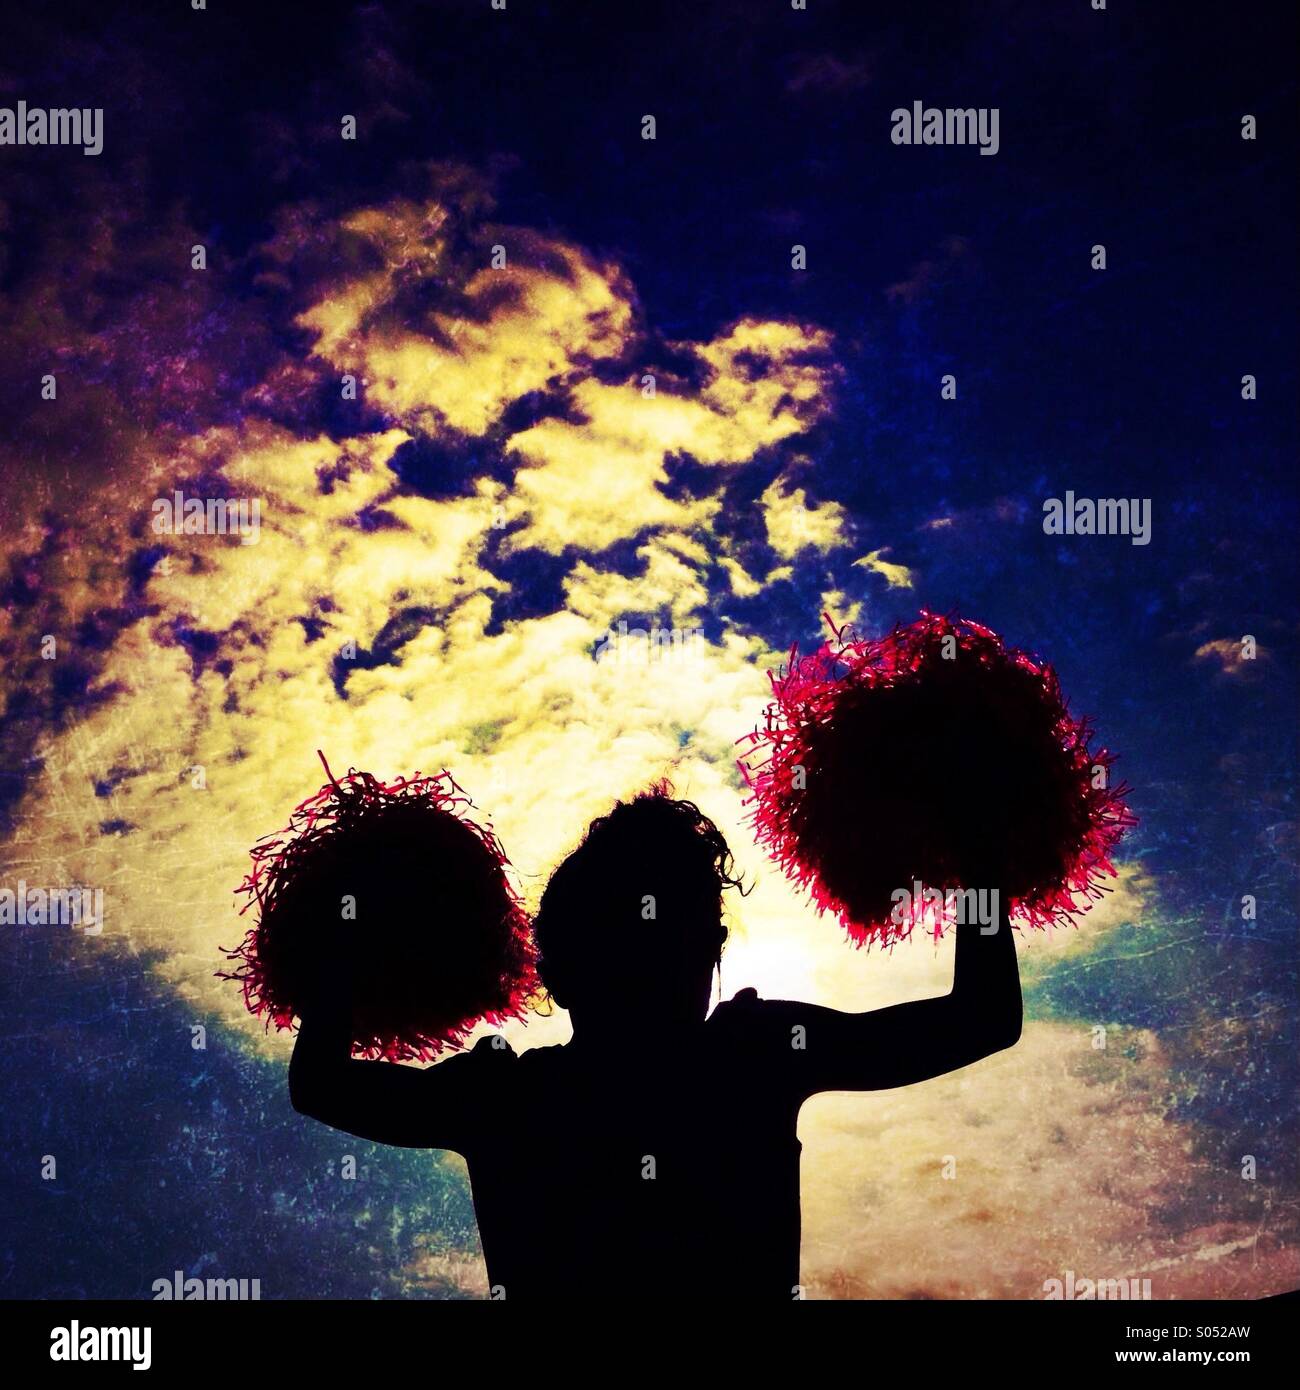 Cheerleader waving Pom poms against dramatic sky Stock Photo